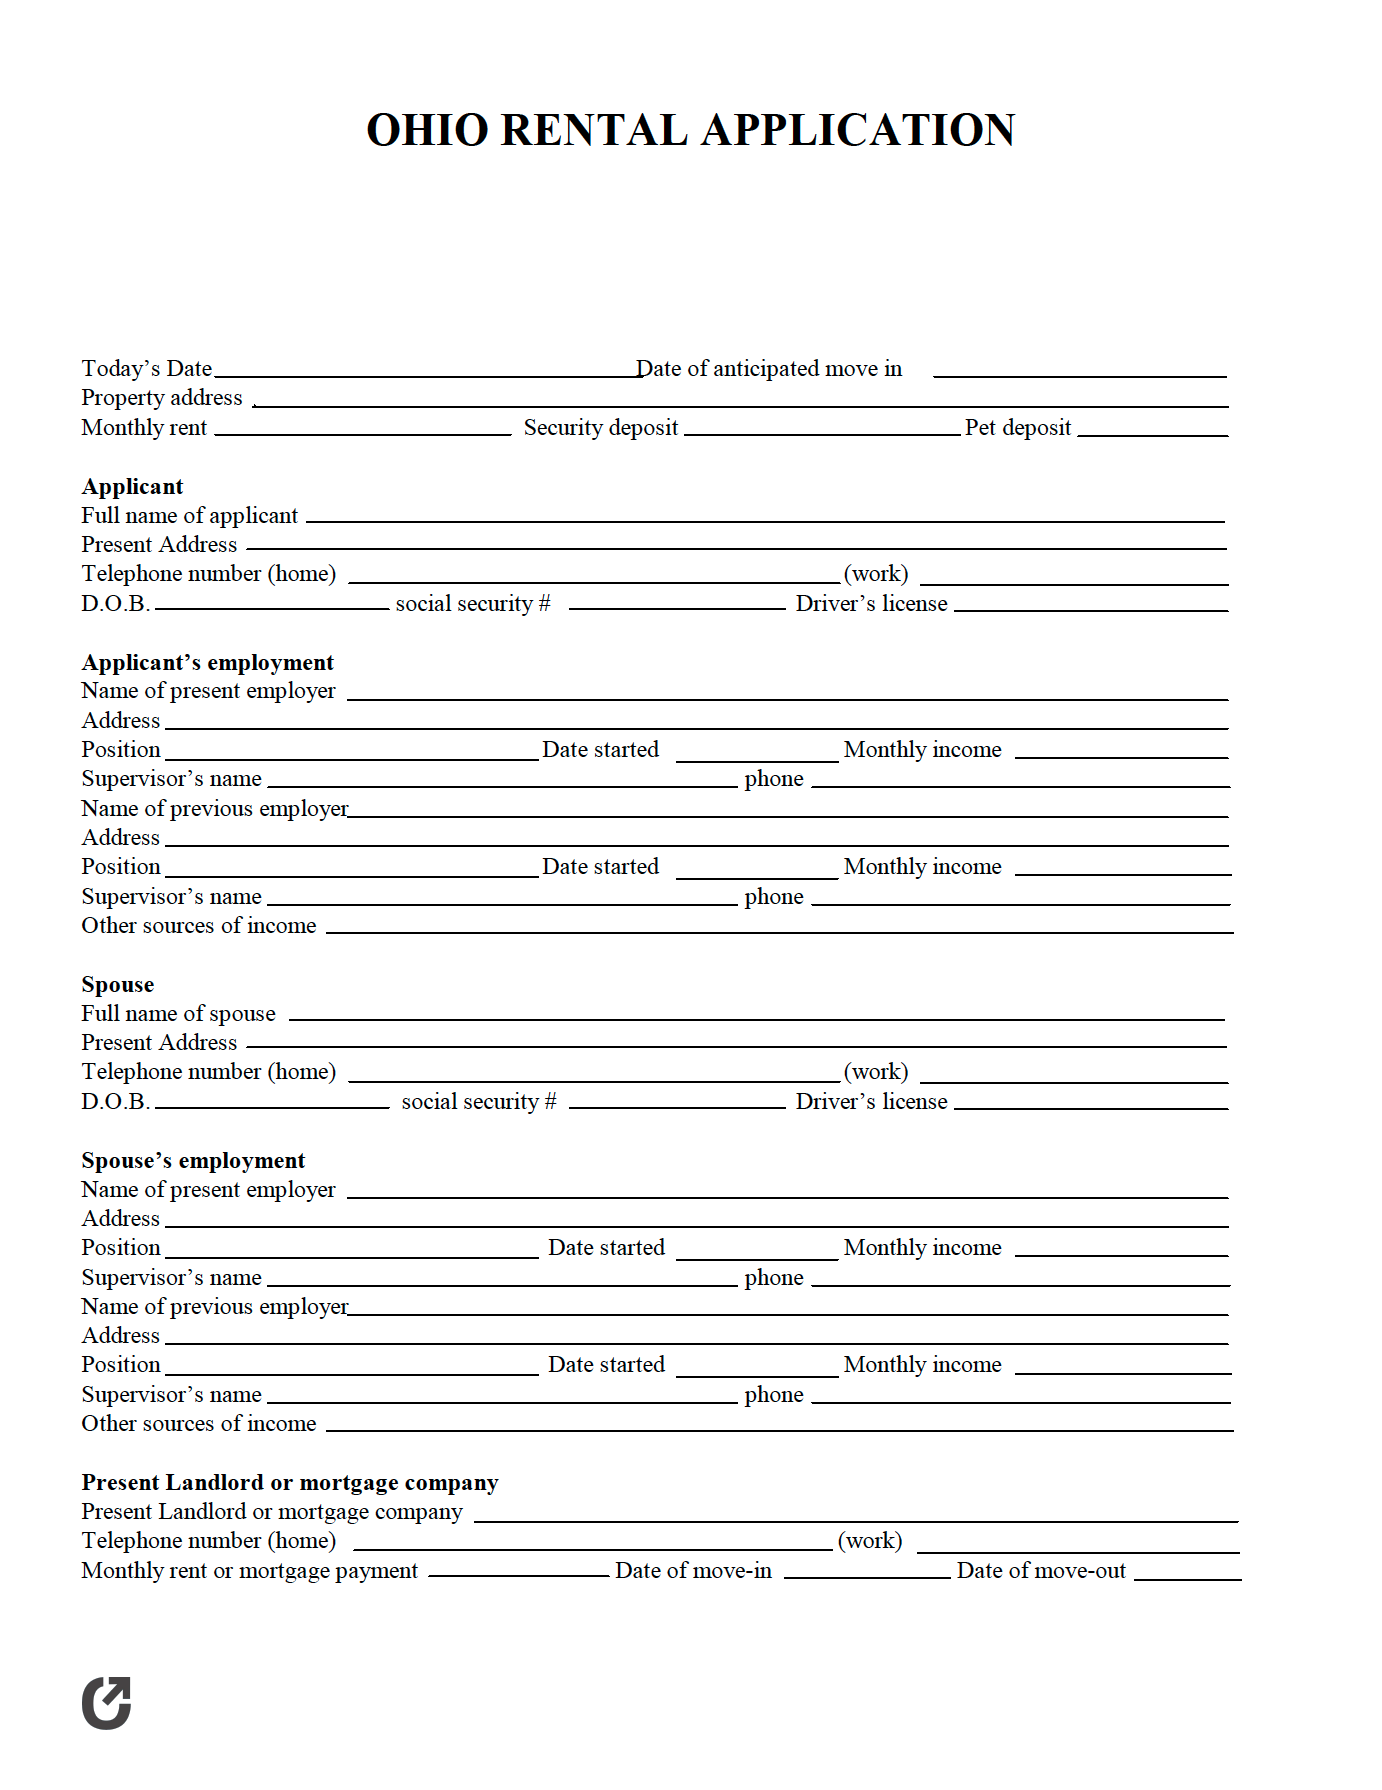 free-ohio-rental-application-pdf-word